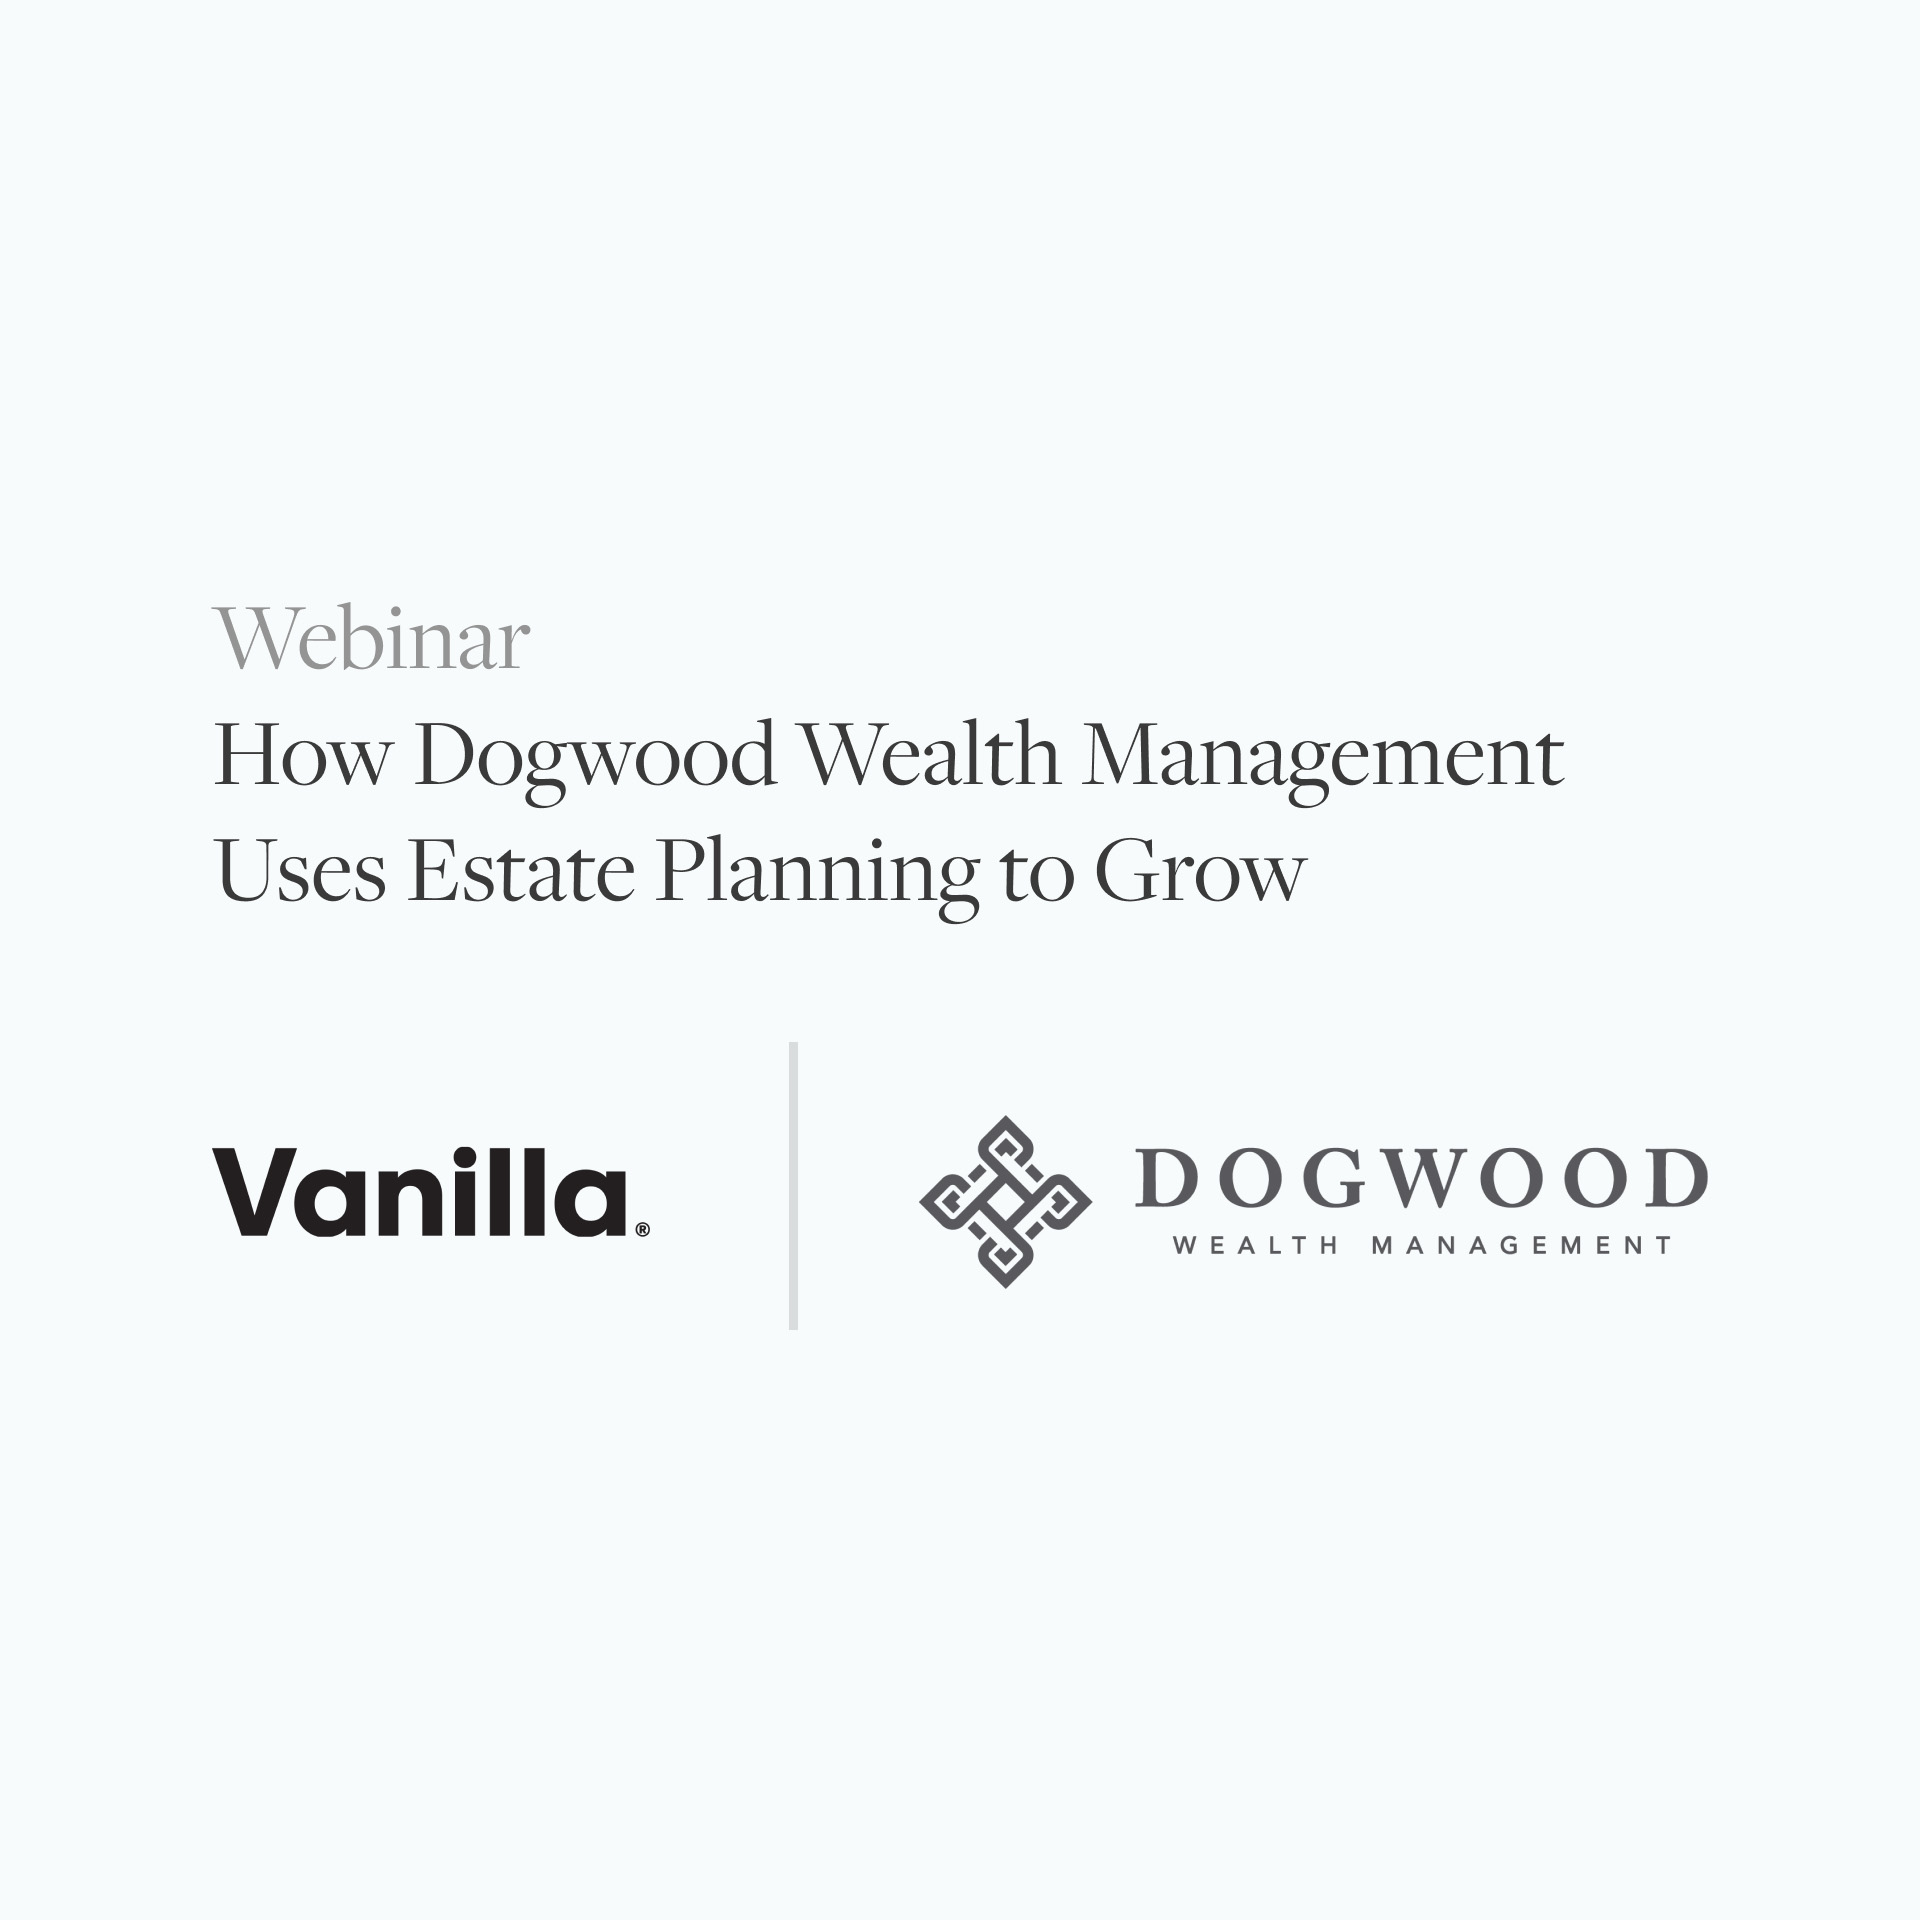 How Dogwood Wealth Management uses estate planning to bring increased value webinar